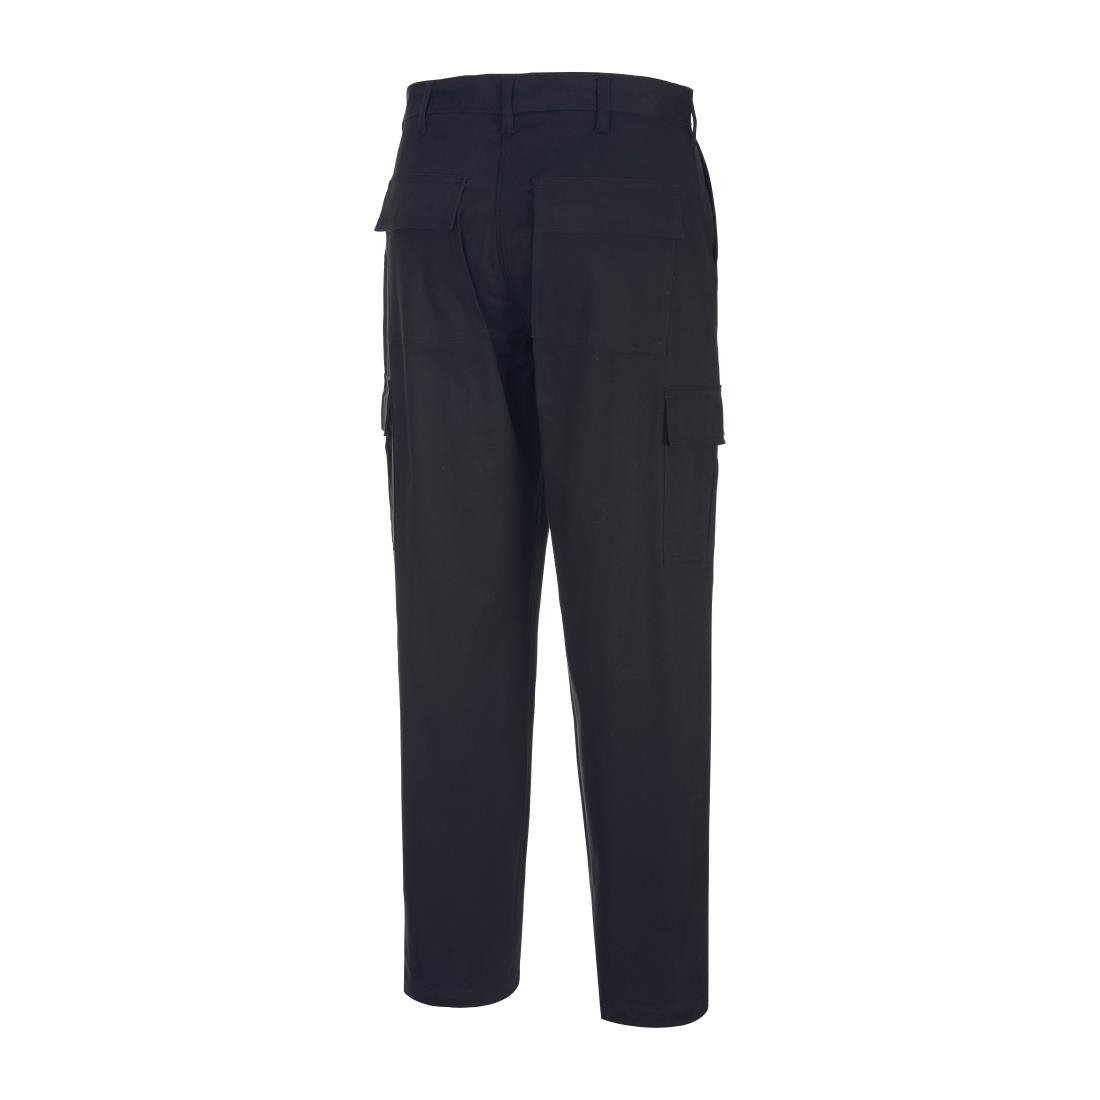 BA088-8 Portwest Eco Women's Stretch Cargo Trousers Black Size 8